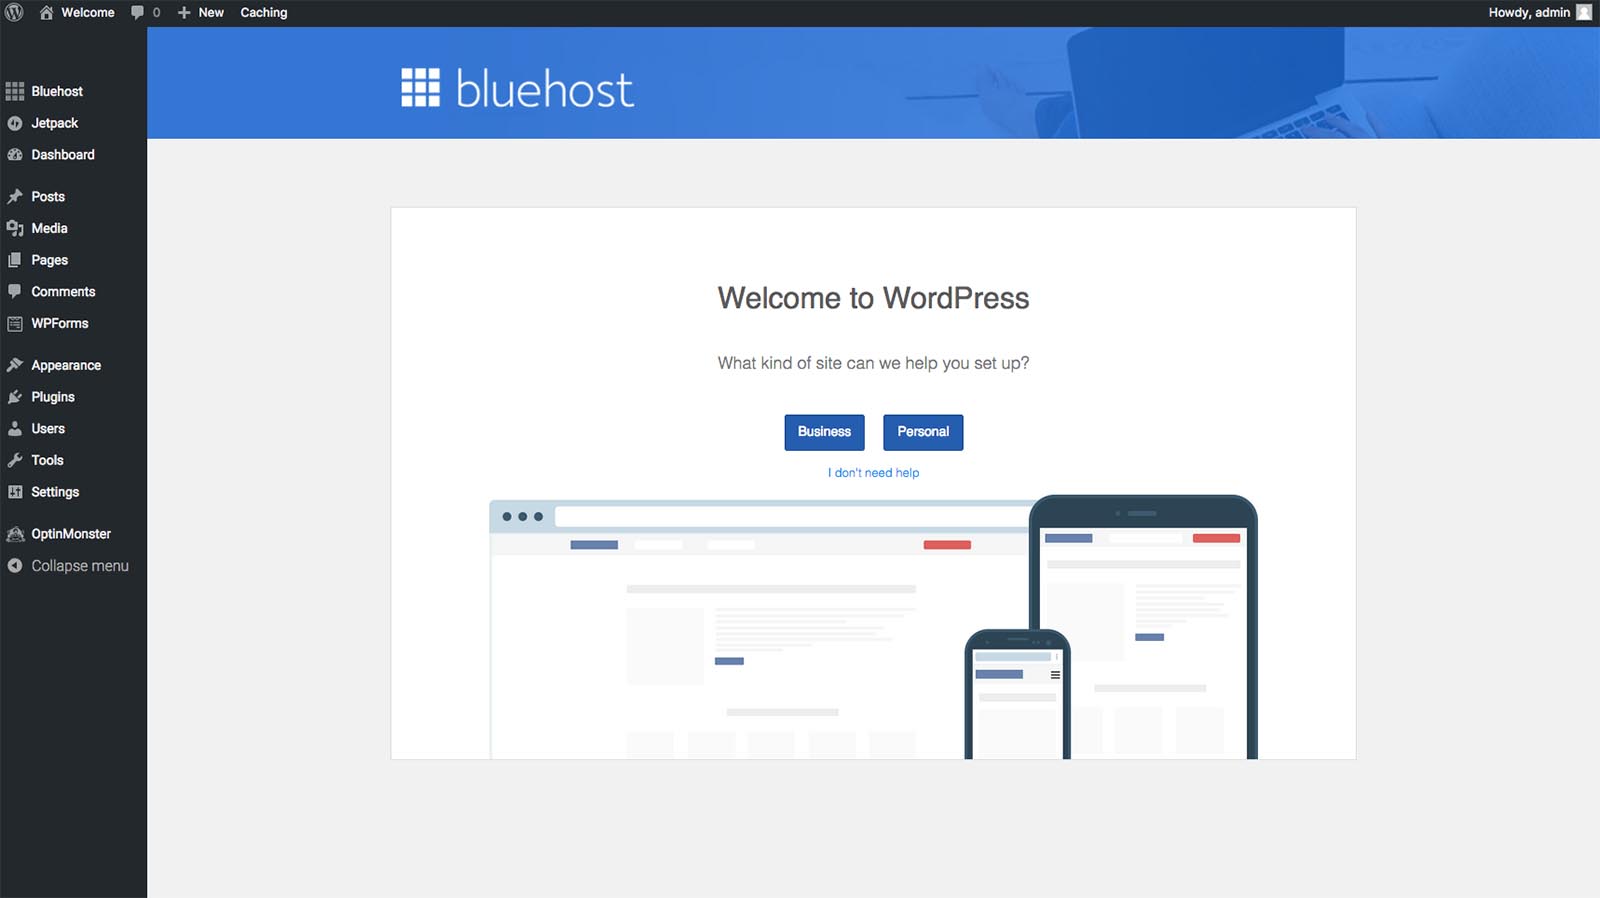 How to start a WordPress blog with Bluehost - WordPress dashboard